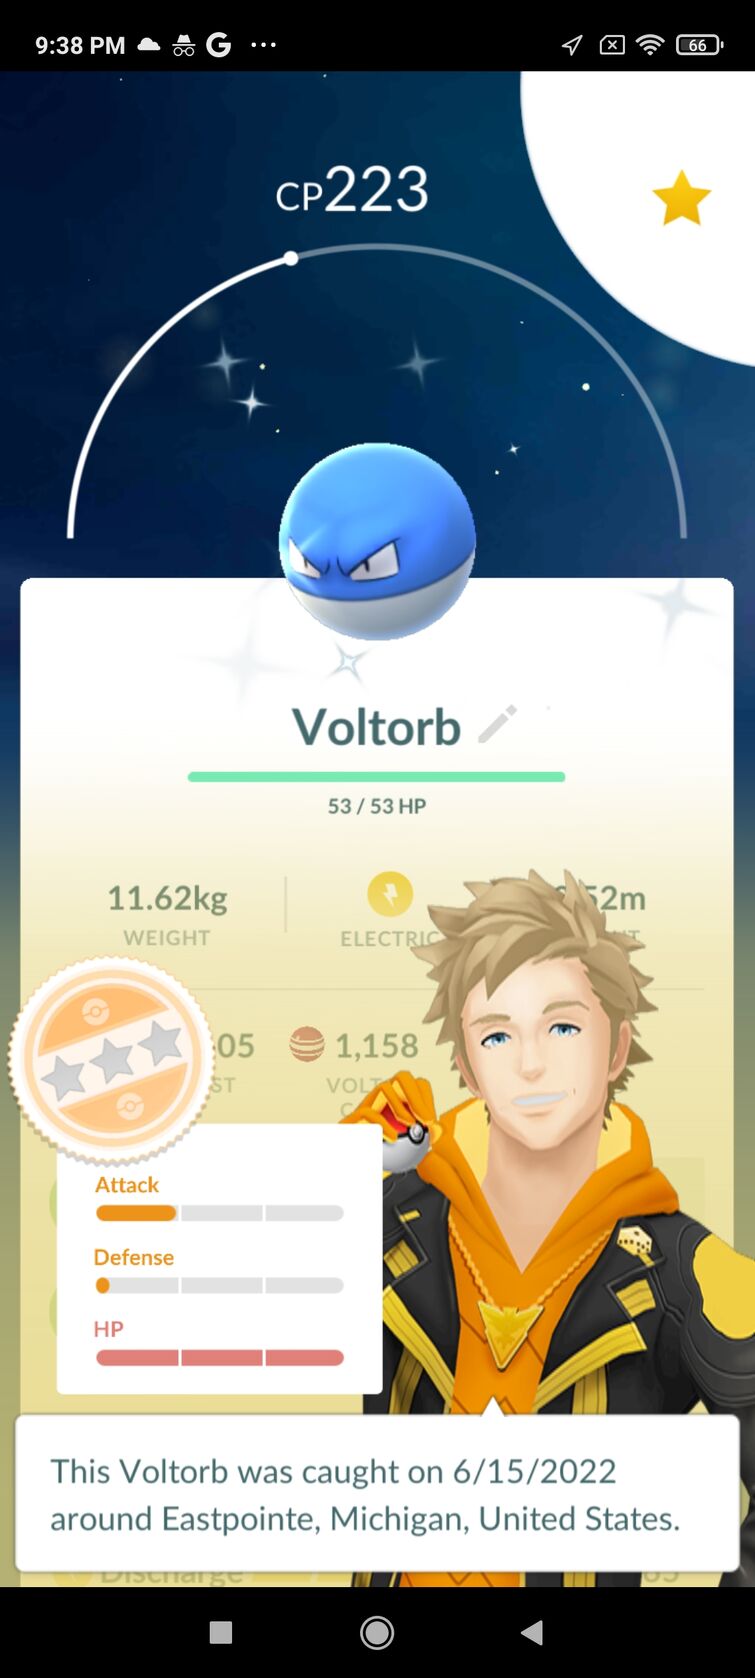 Hisuan Voltorb stats pushed to Pokémon GO